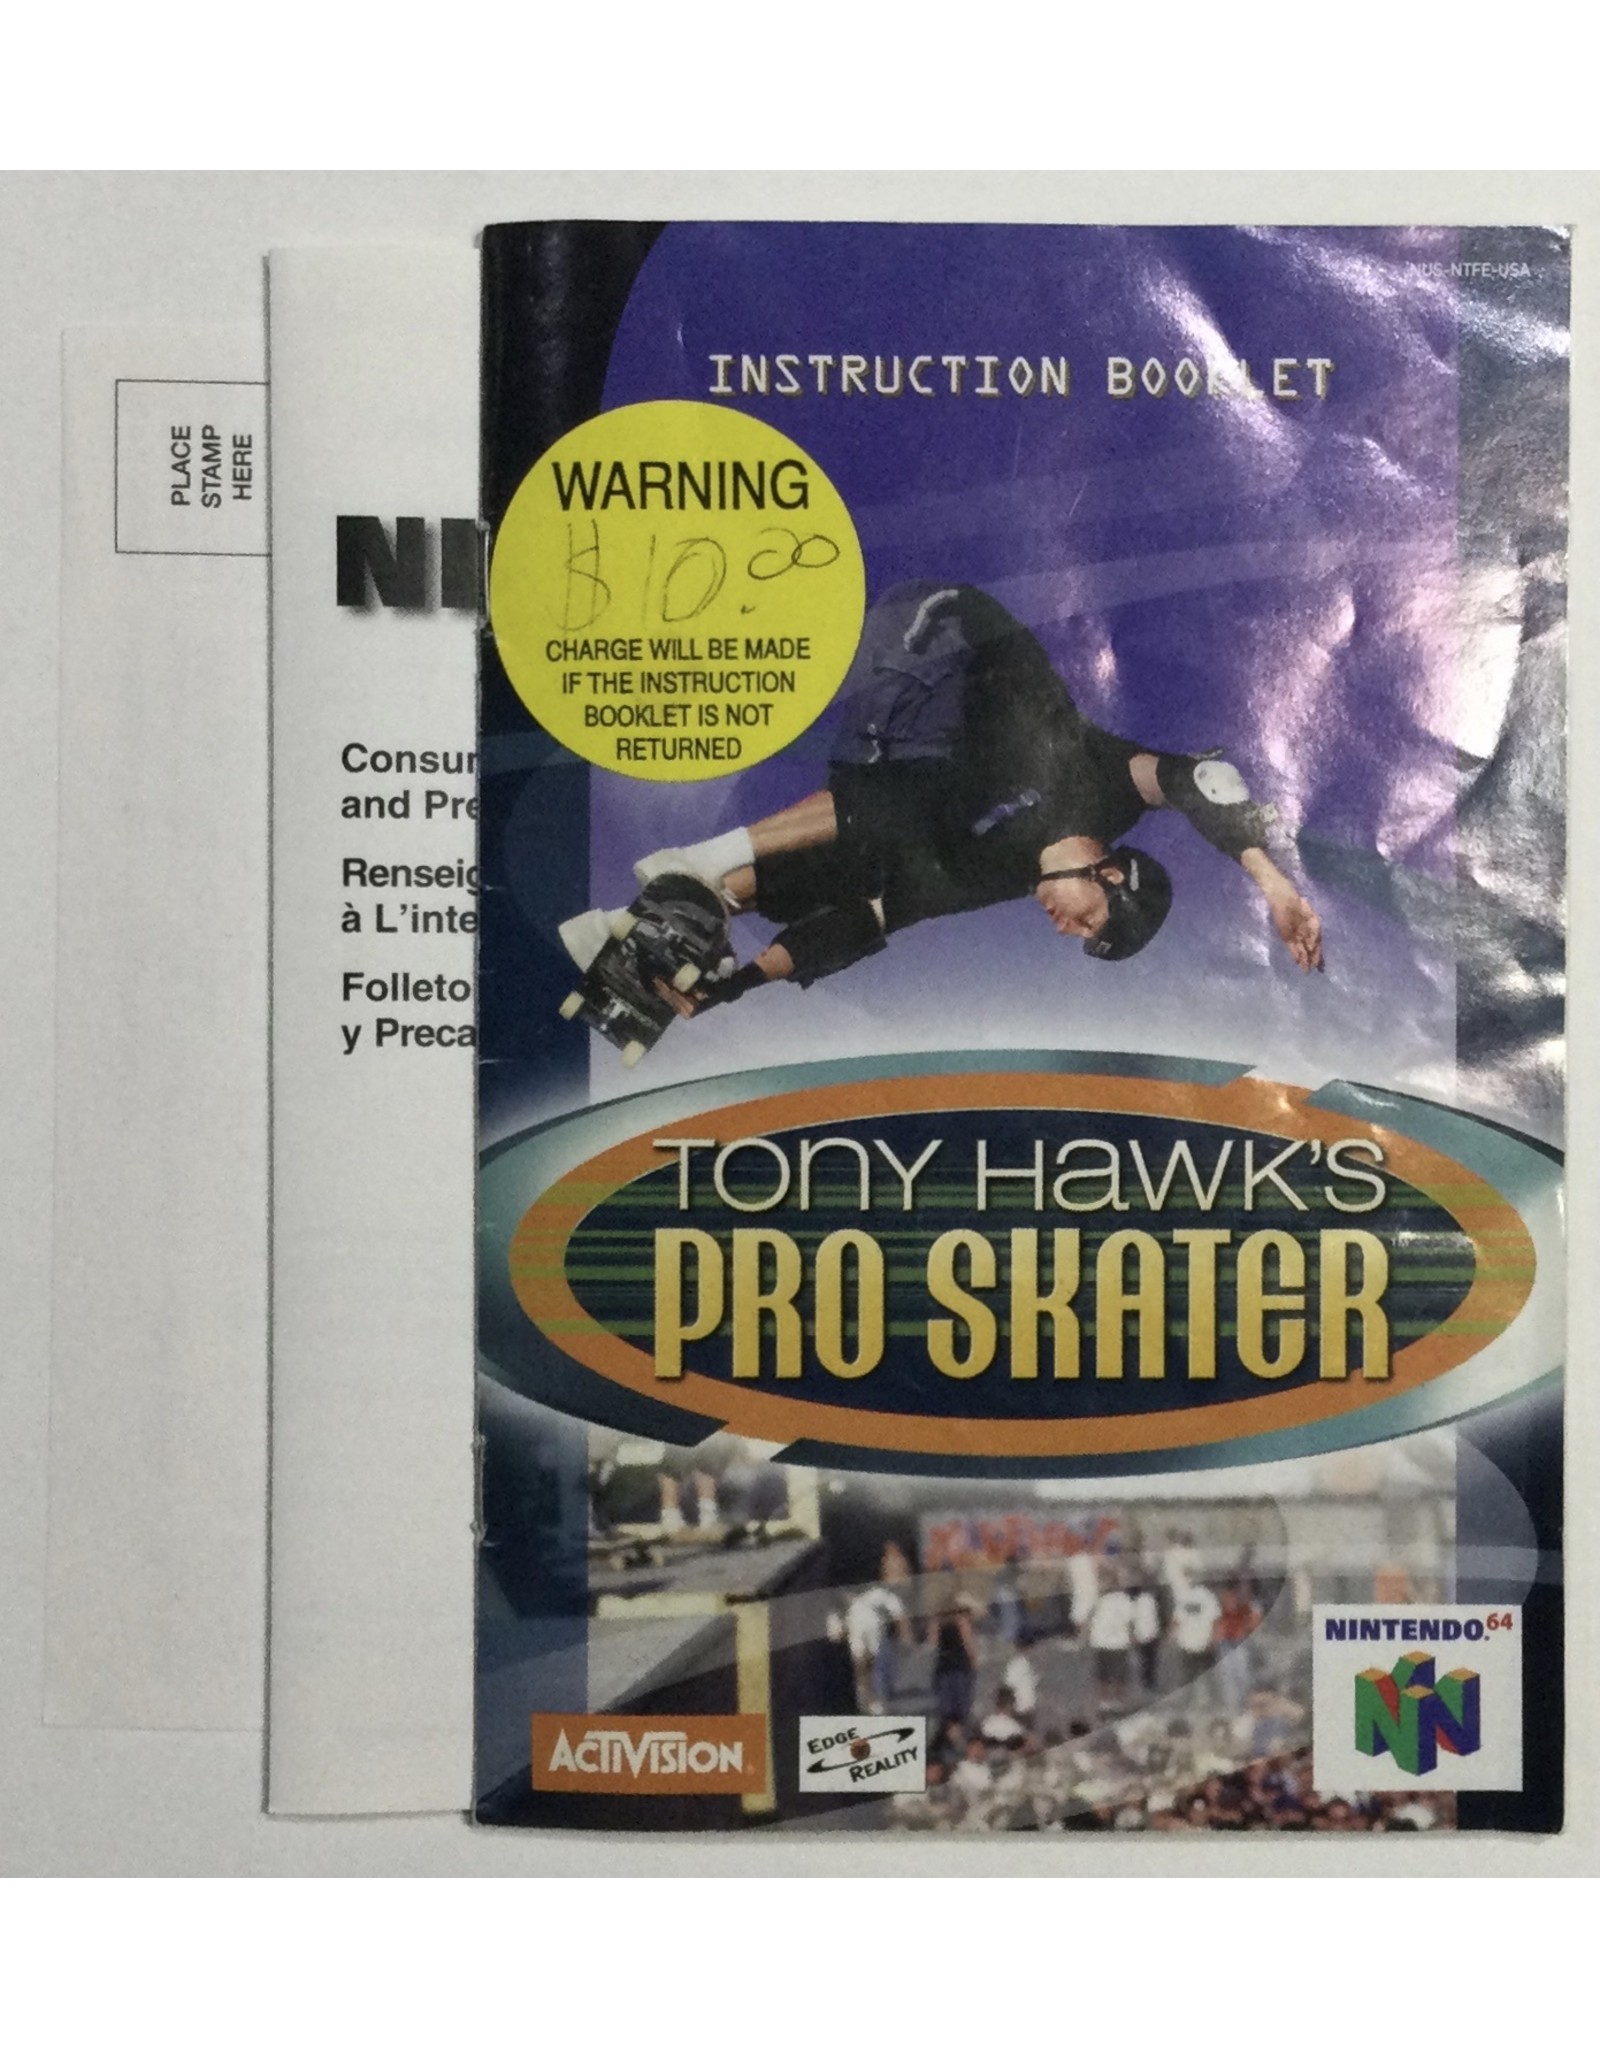 ACTIVISION Tony Hawk's Pro Skater for Nintendo 64 (N64) - CIB